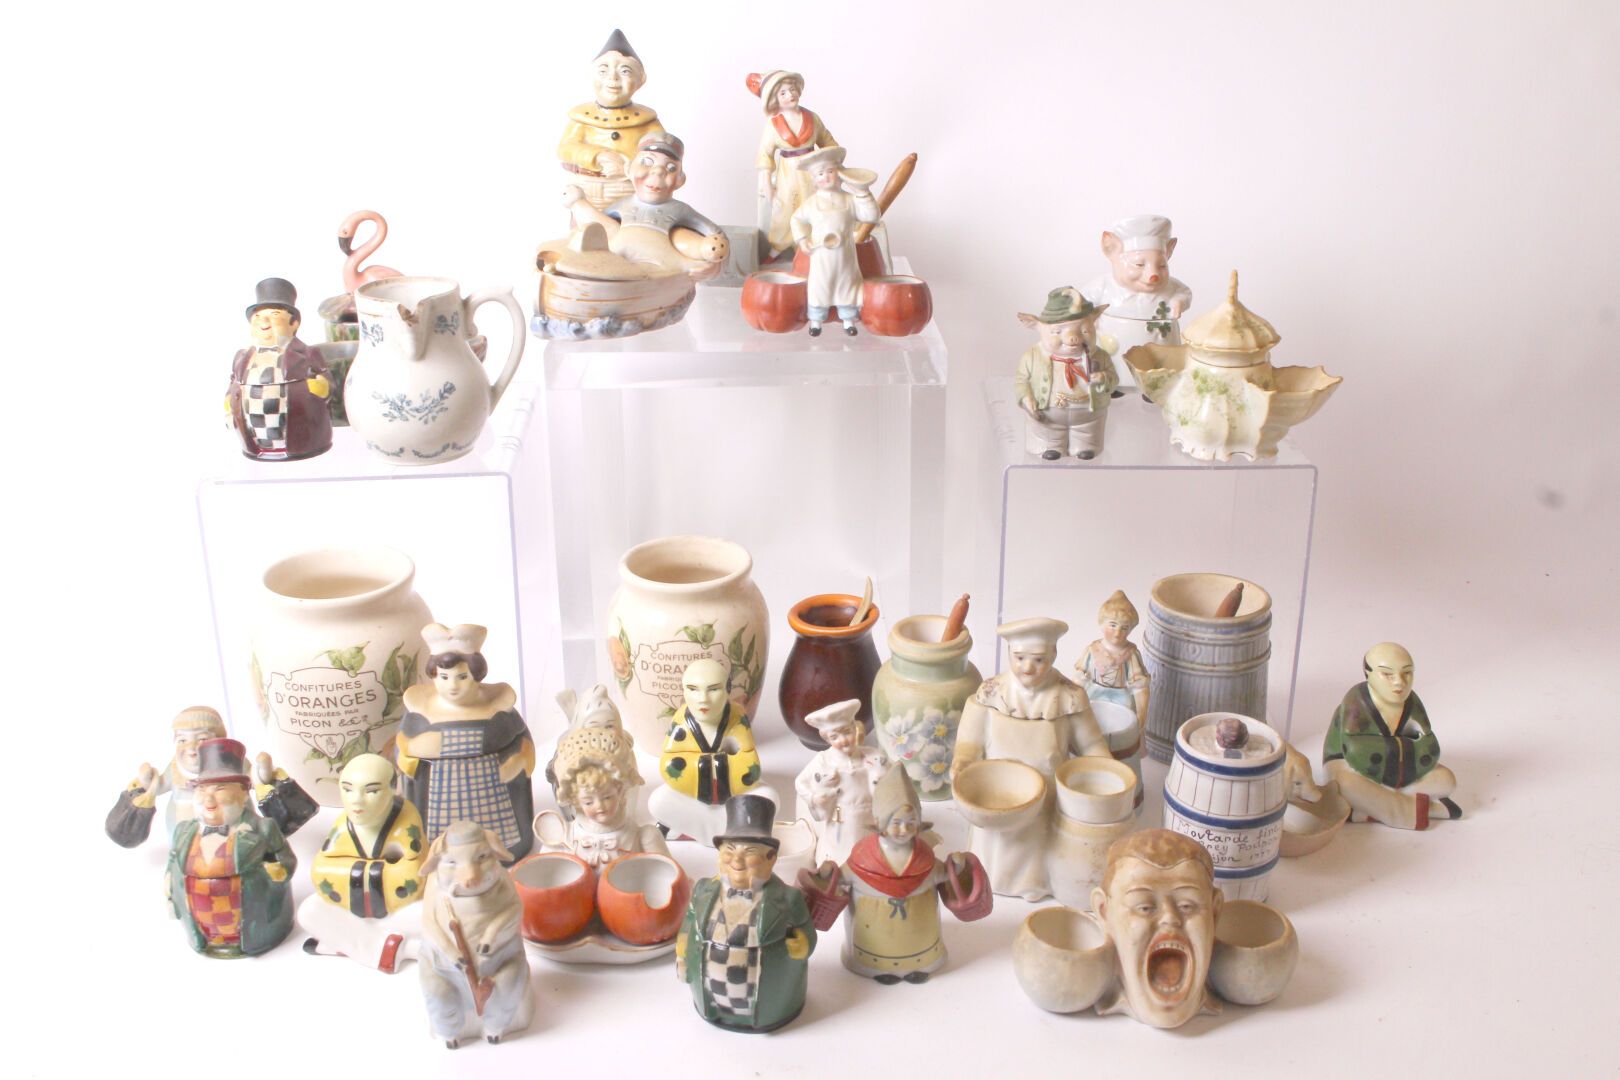 Null 一组具有拟人和变异装饰的陶器和瓷器芥末罐。

20世纪